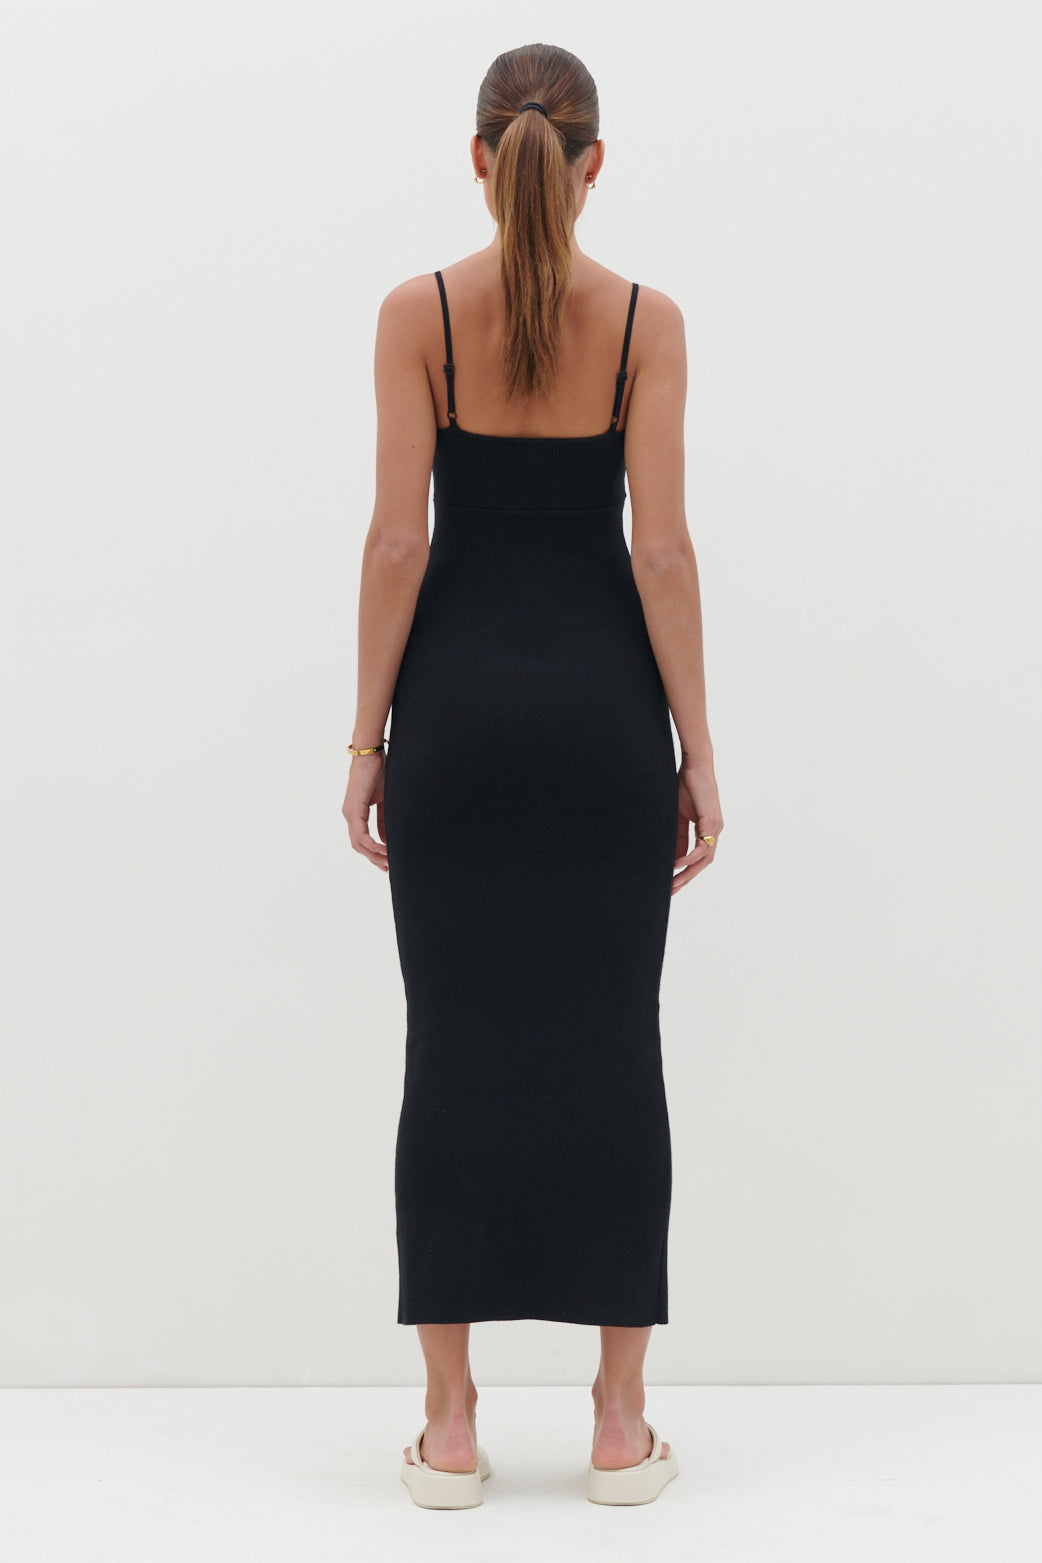 Kaya Knit Midaxi Dress - Black